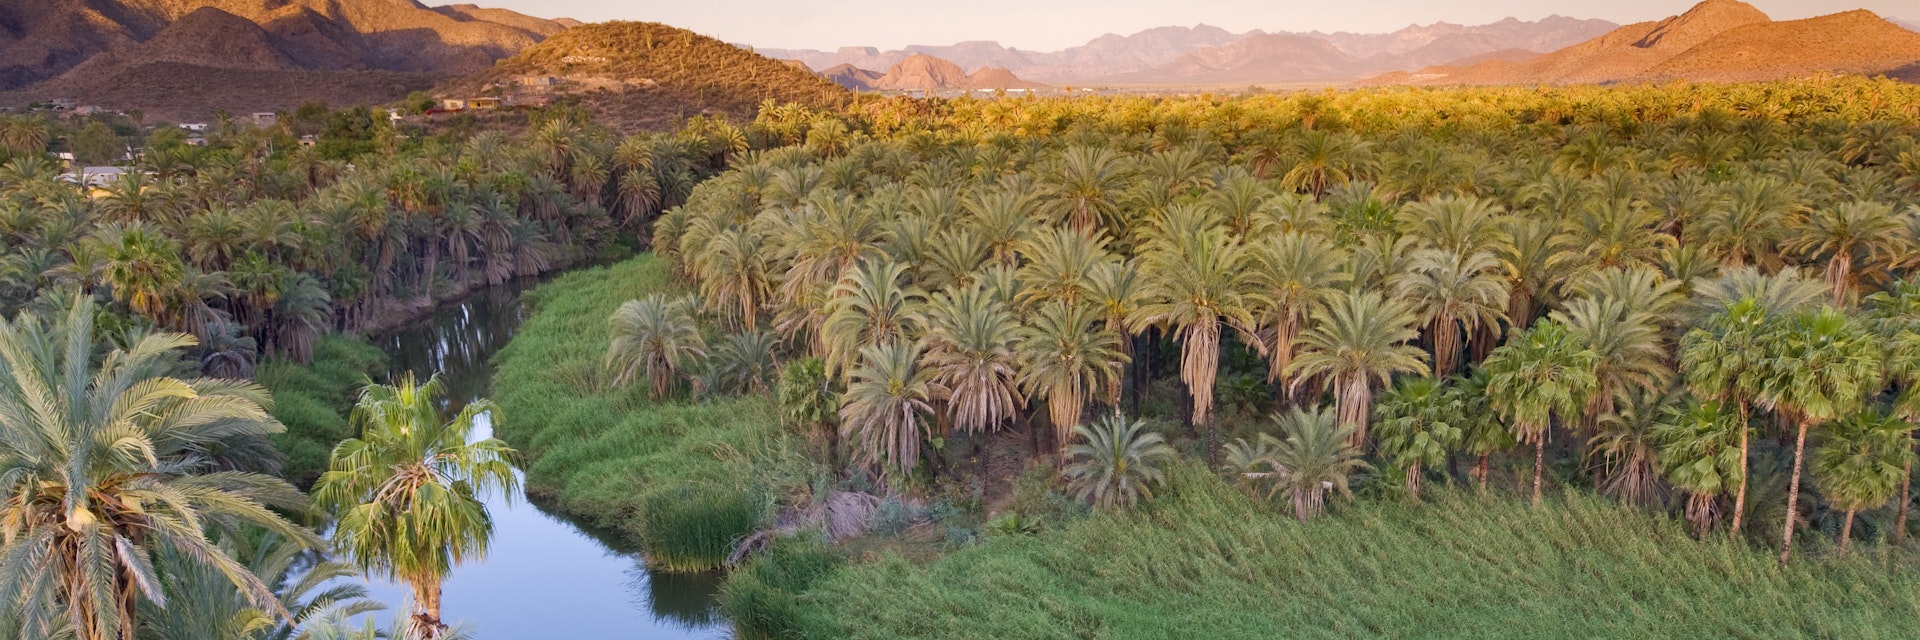 Date palms (Phoenix dactylifera) and fan palms at sunrise by Rio Mulege (Arroyo Santa Rosalia) with Sierra de Guadalupe in background.